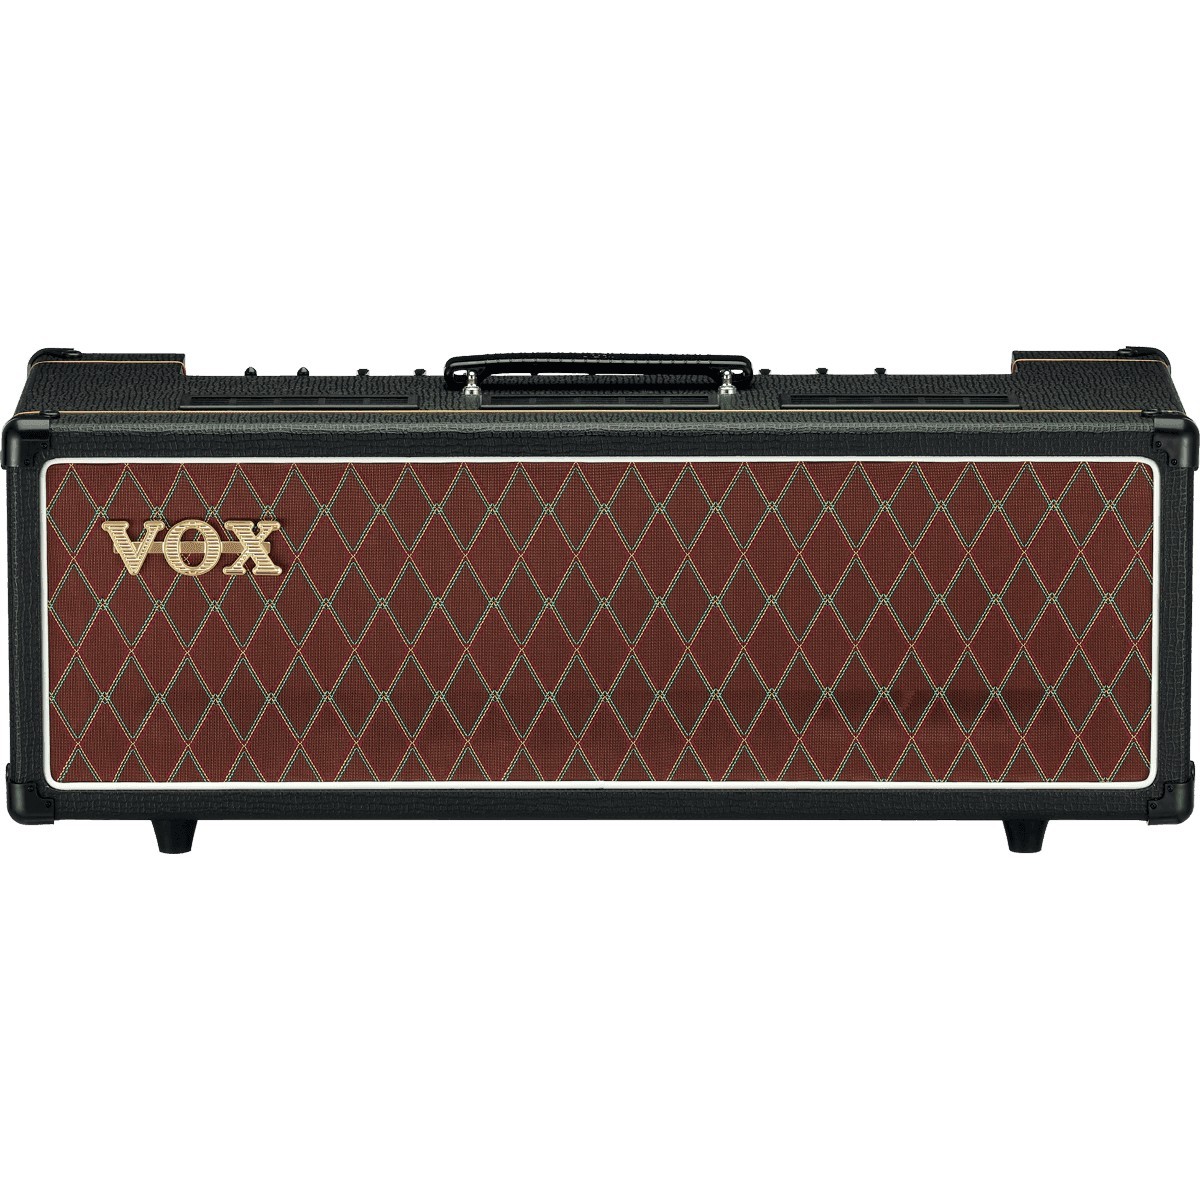 VOX AC30 Custom Head